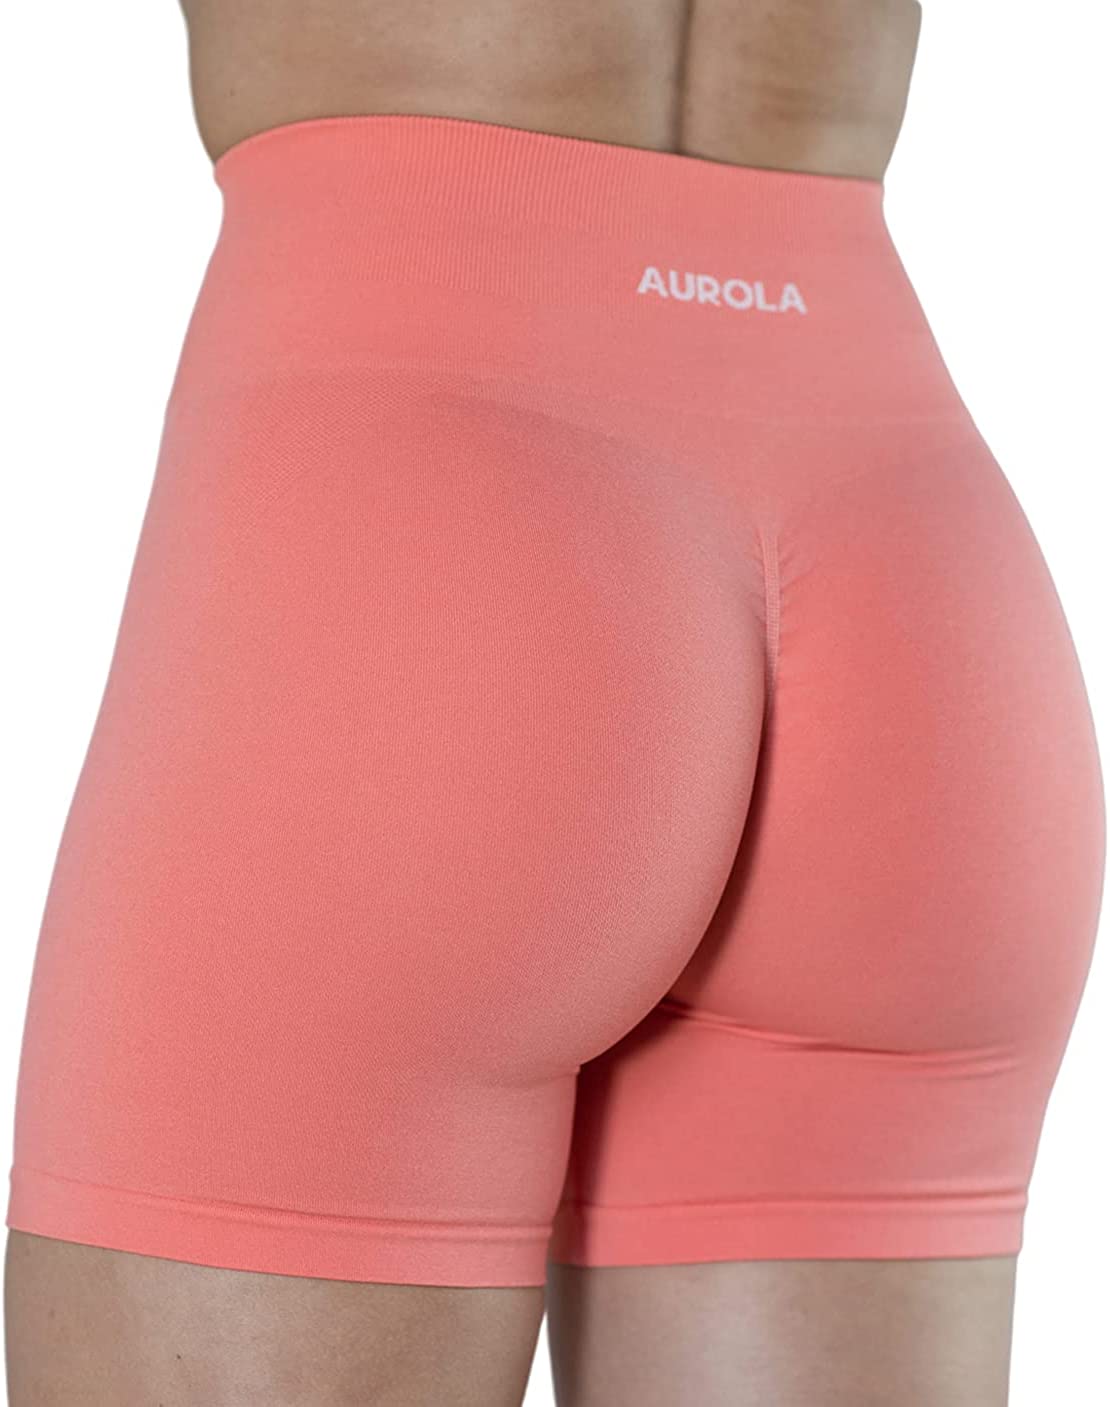 AUROLA Intensify Workout Shorts for Women Seamless Brazil